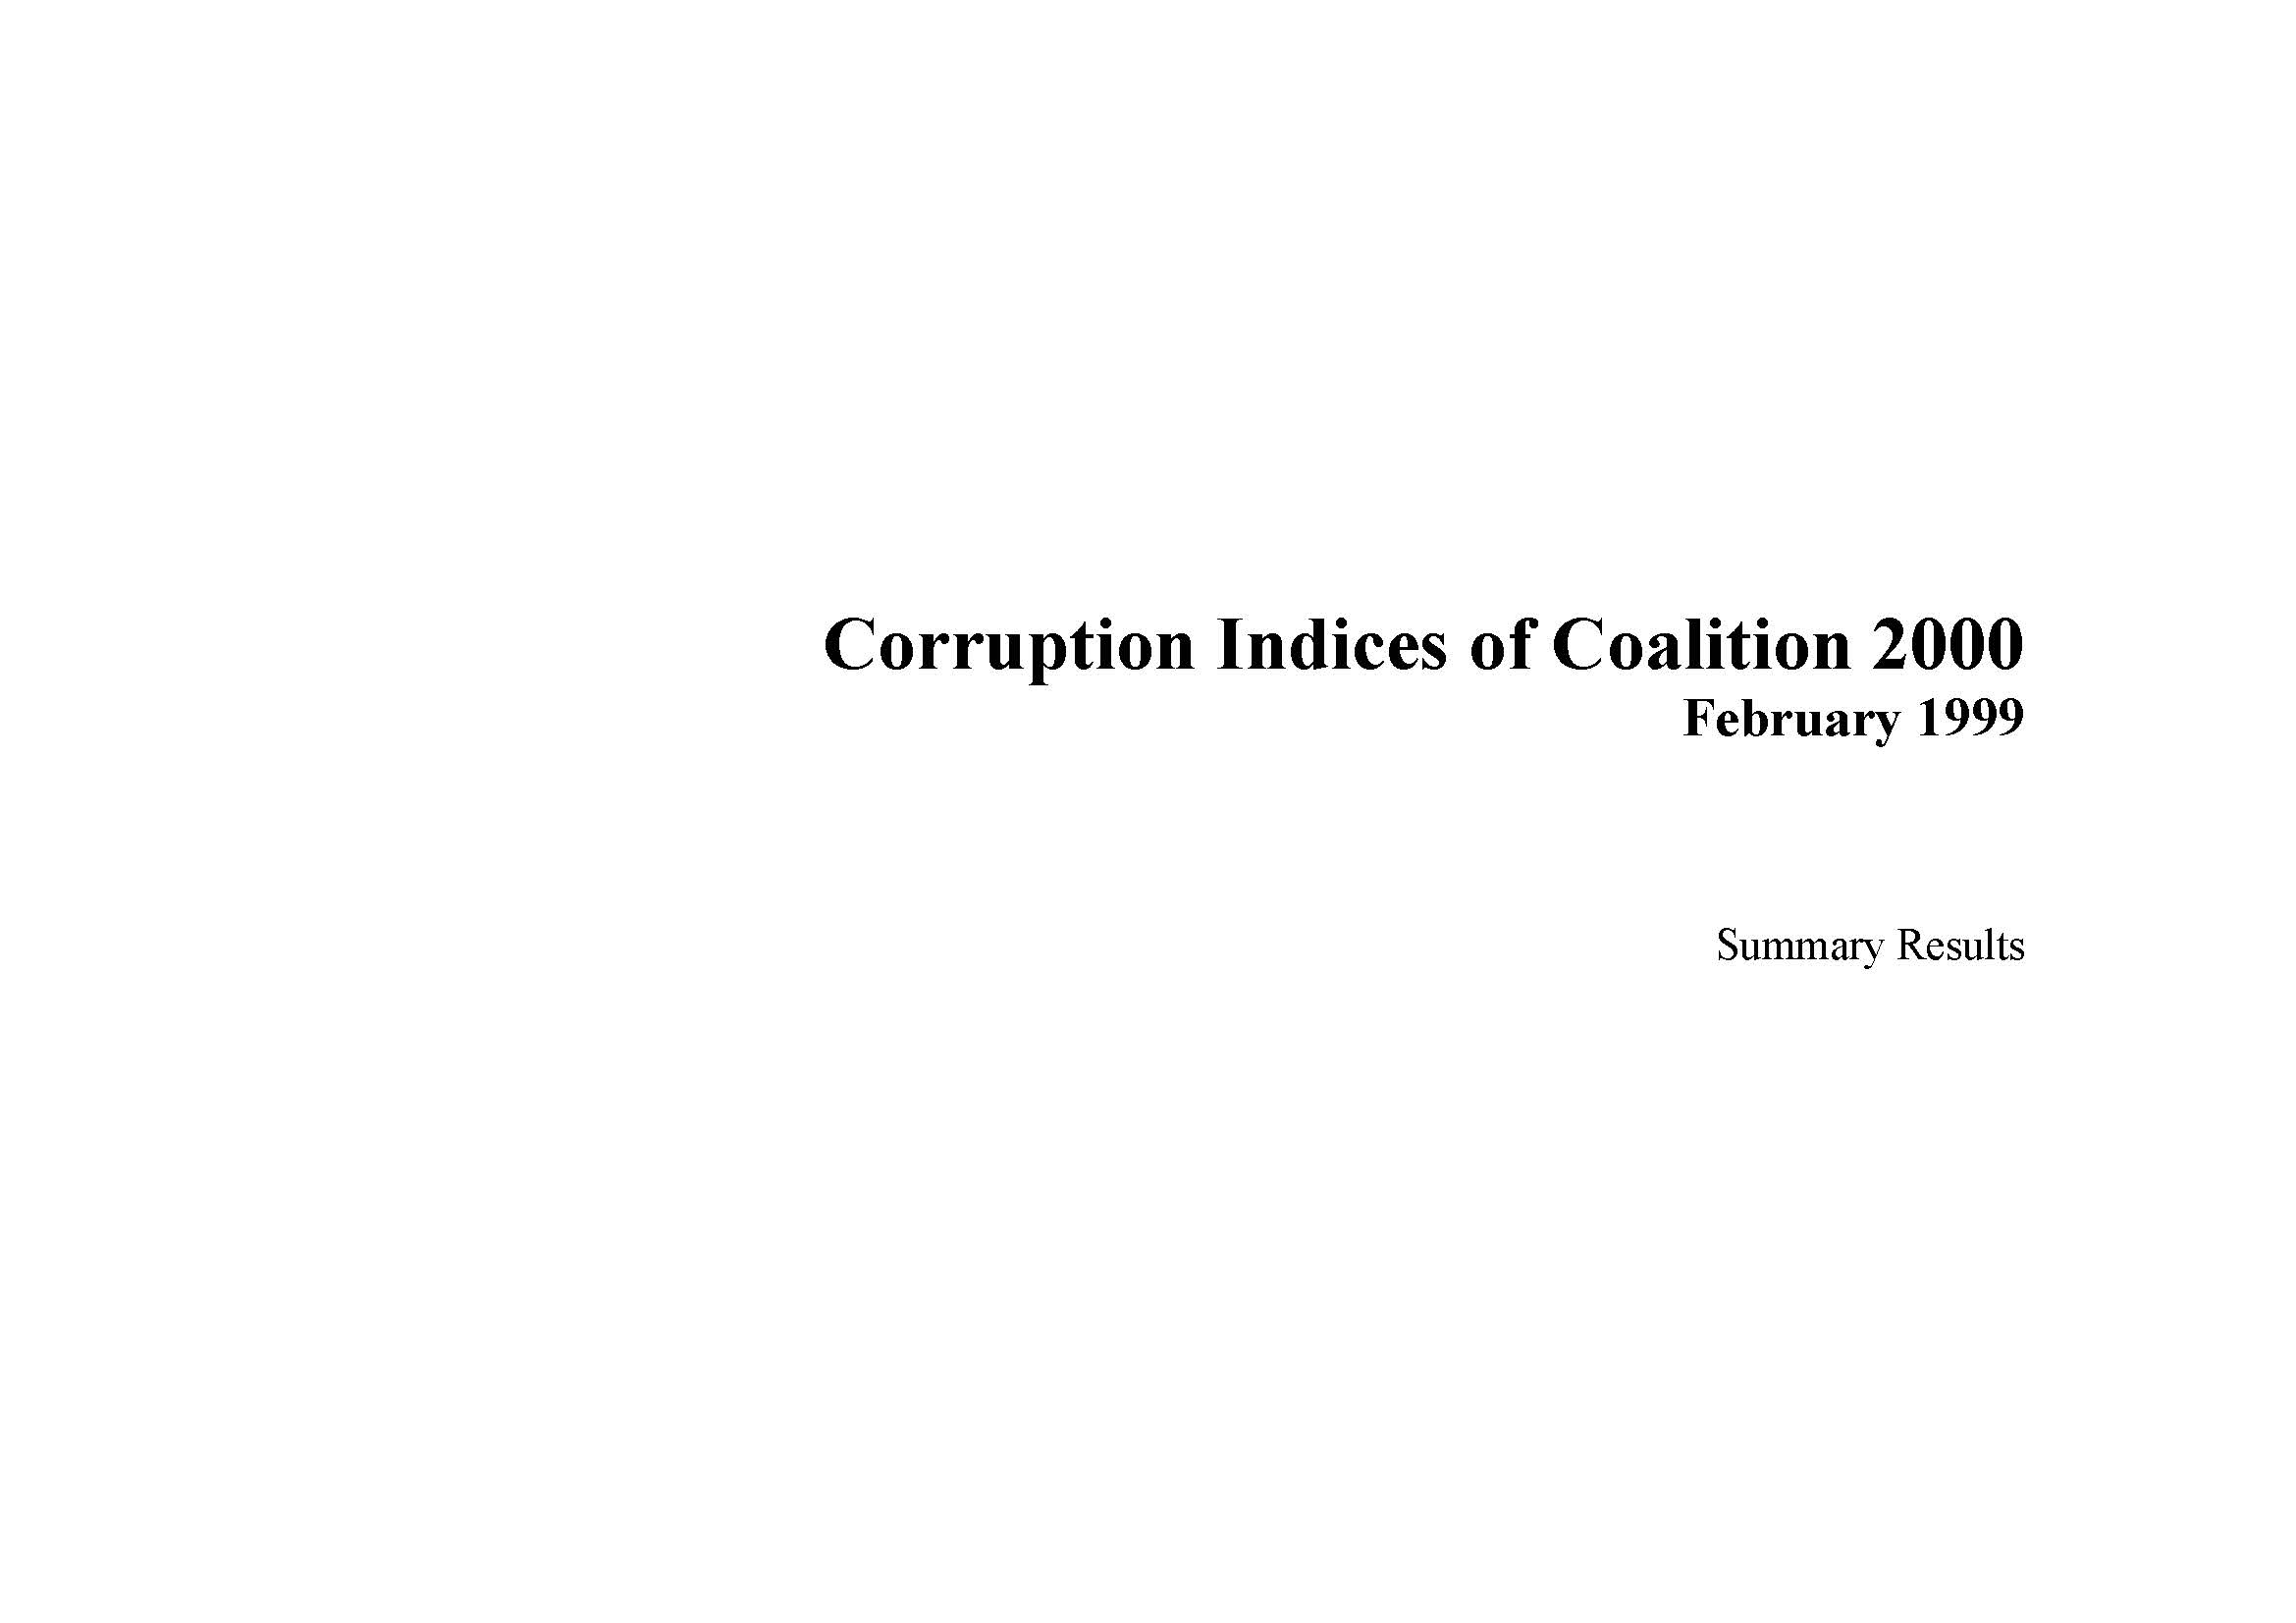 Corruption indices of Coalition 2000, February 1999